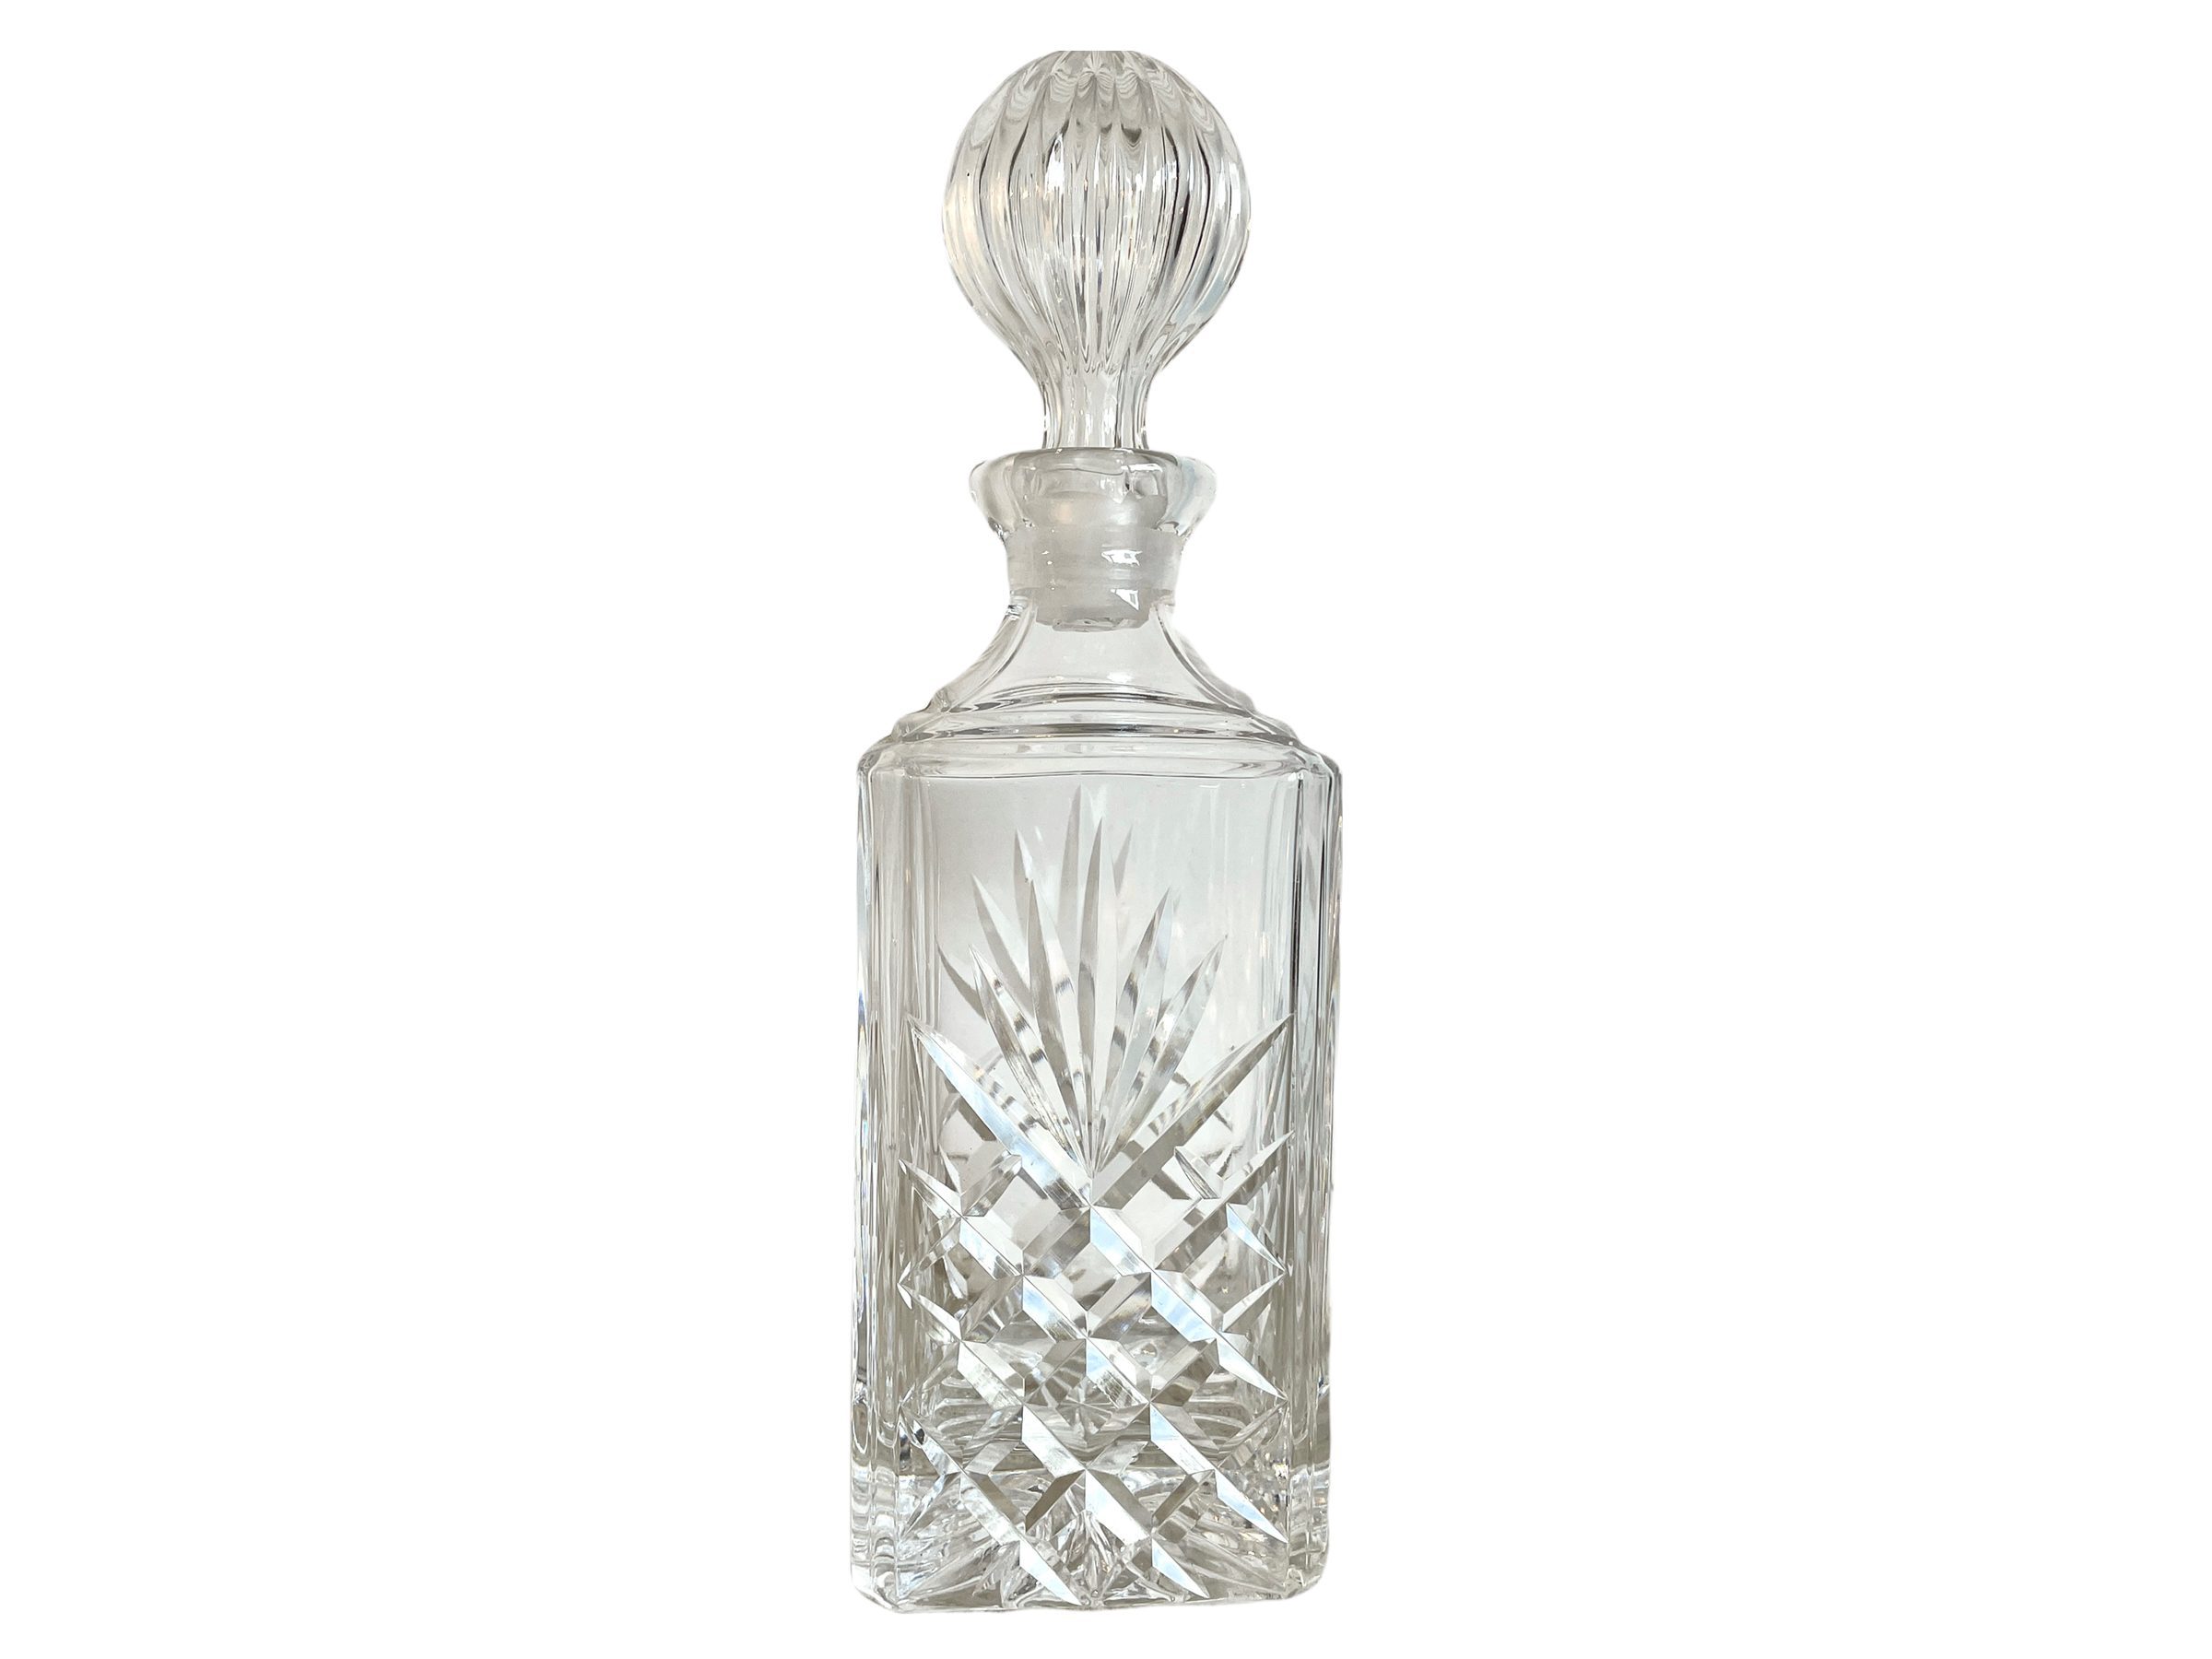 Vintage English Crystal Glass Drinks Decanter Spirits Whisky Gin